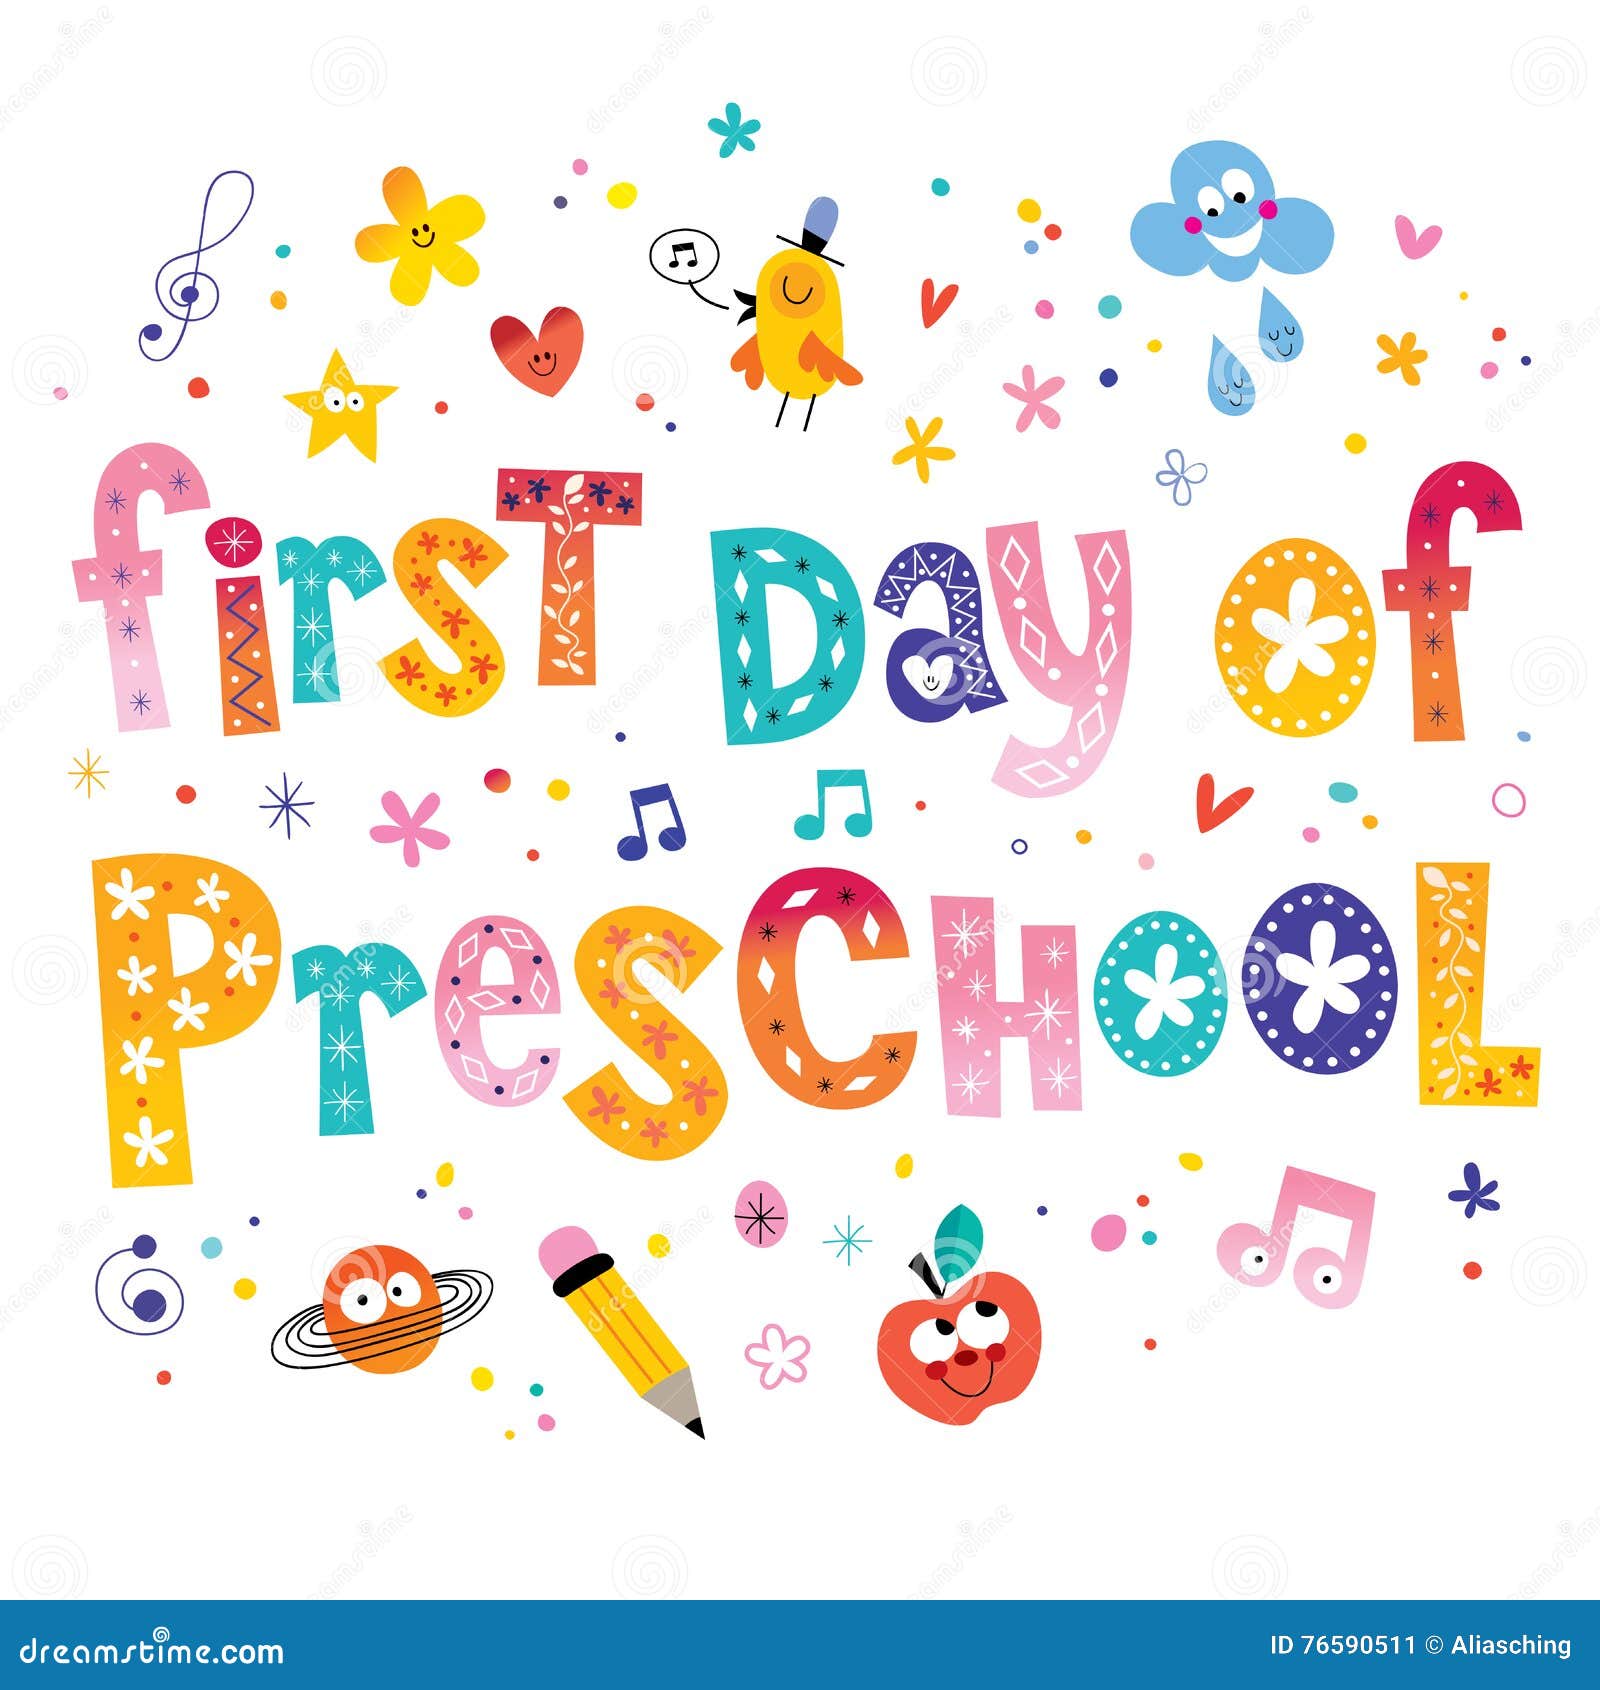 first day of preschool